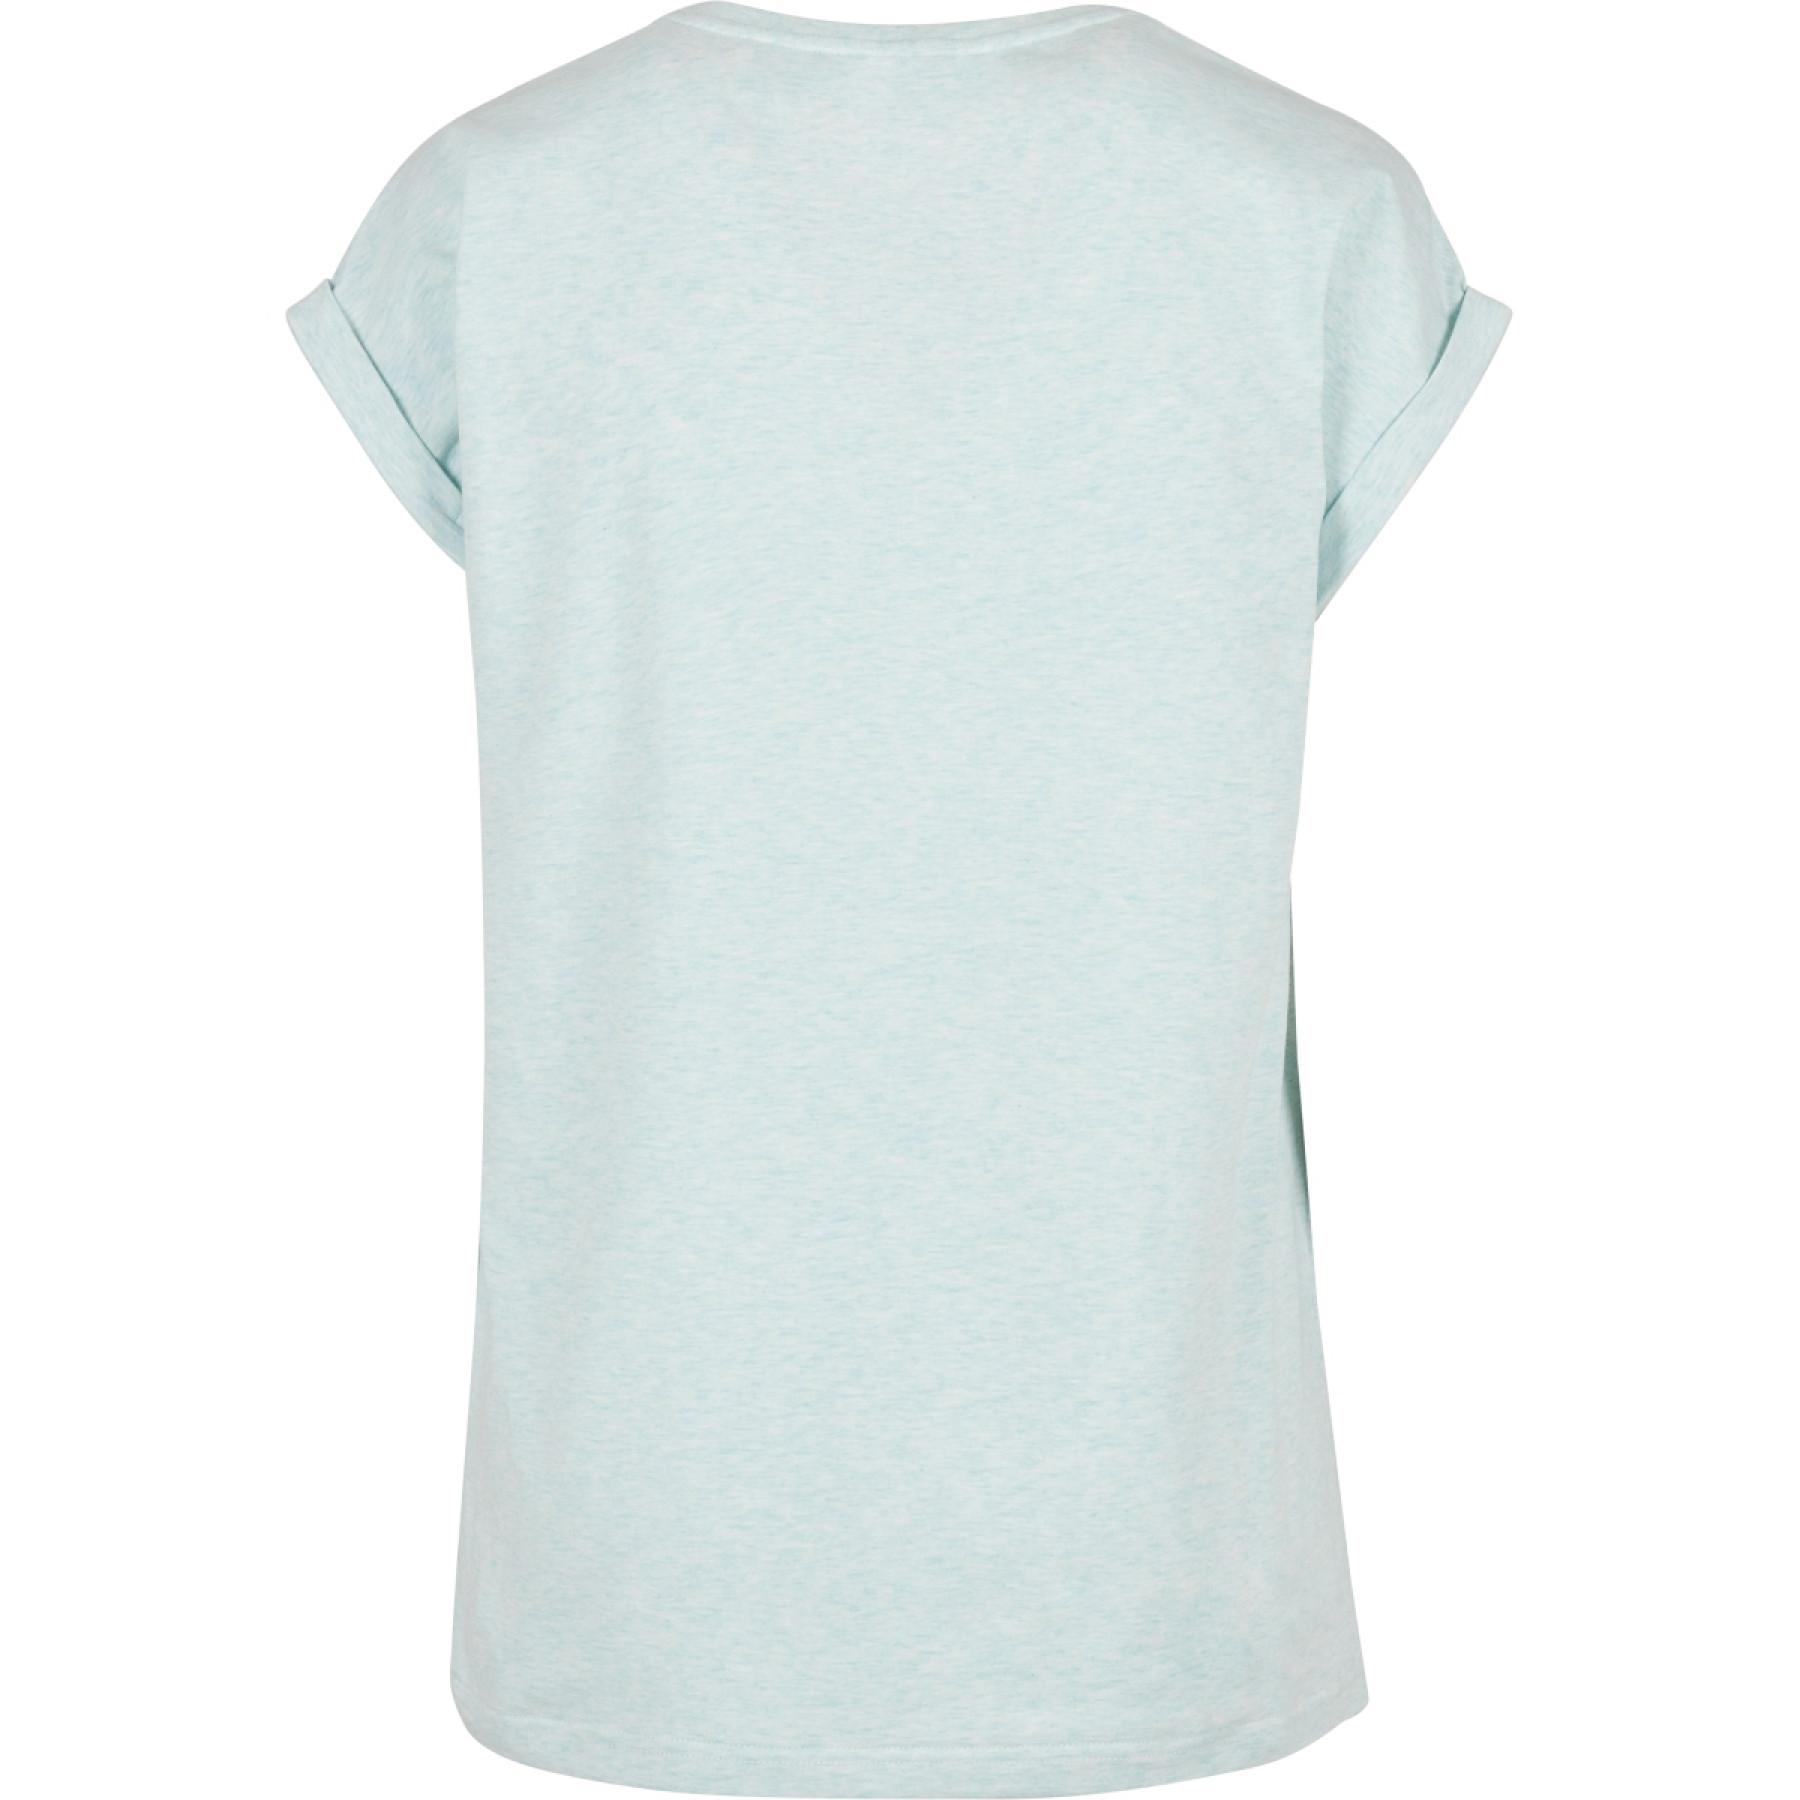 Women's T-shirt Urban Classics color melange extended shoulder